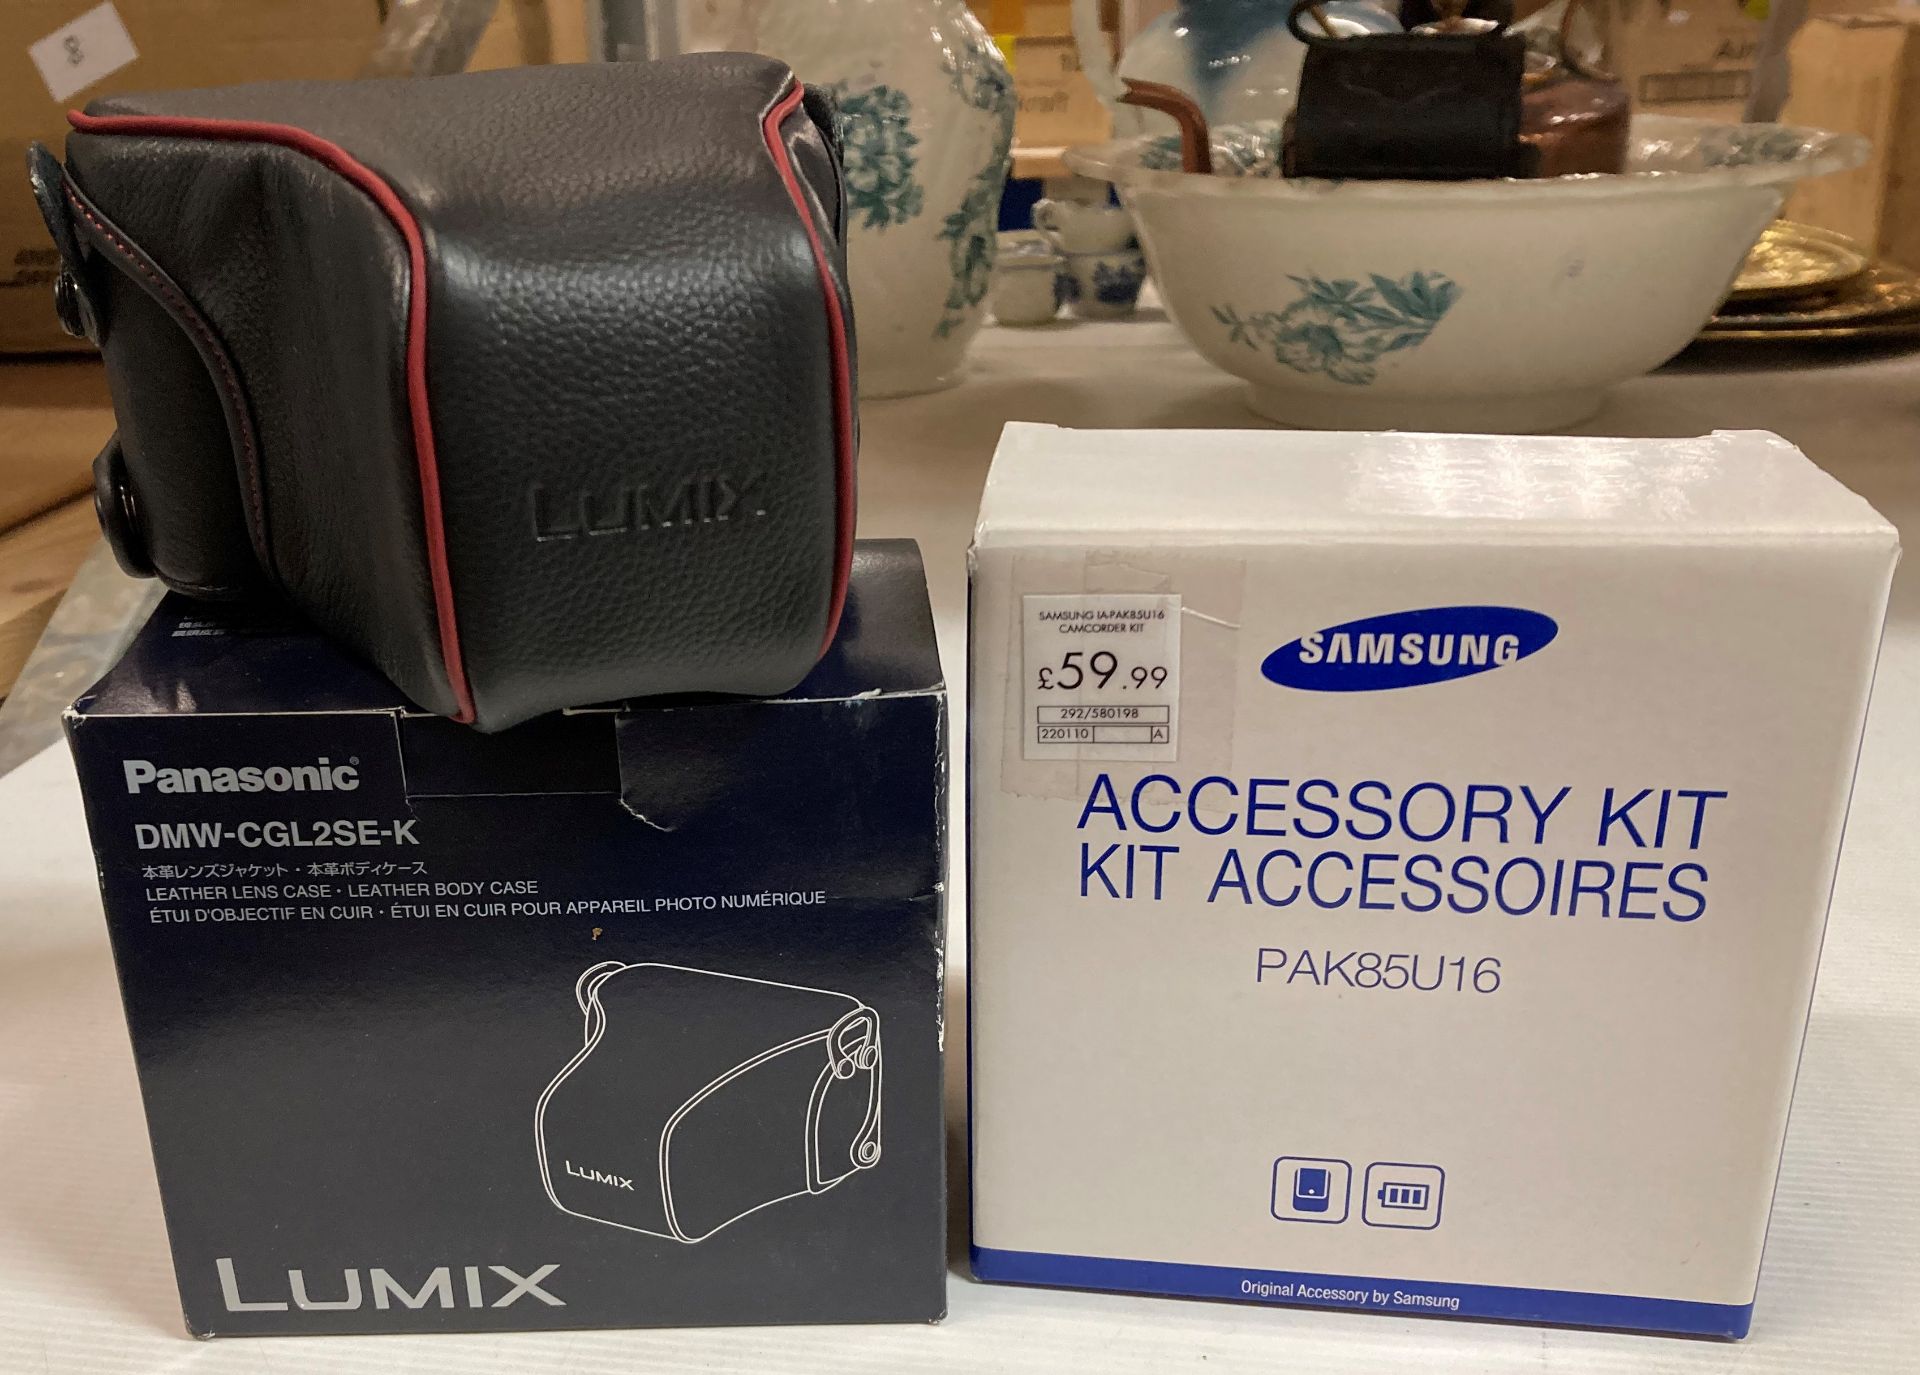 17 x Samsung PAK85U16 Accessory kits and 7 Panasonic DMW-CGK3 and DMW-CGL2SE-k leather camera cases